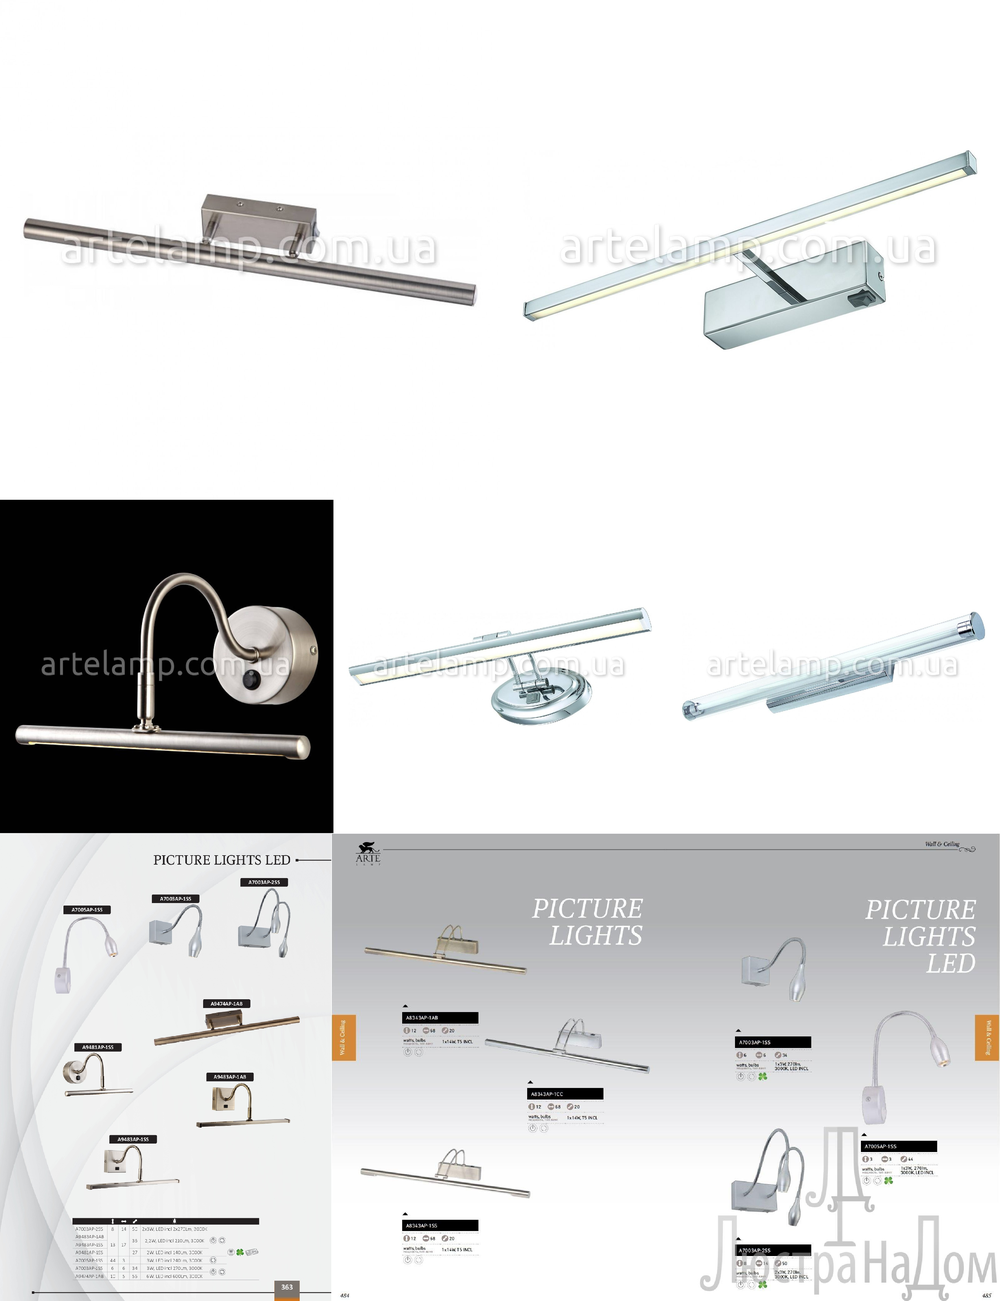 «». Arte Lamp серия Picture lights LED артикул A7005AP-1SS